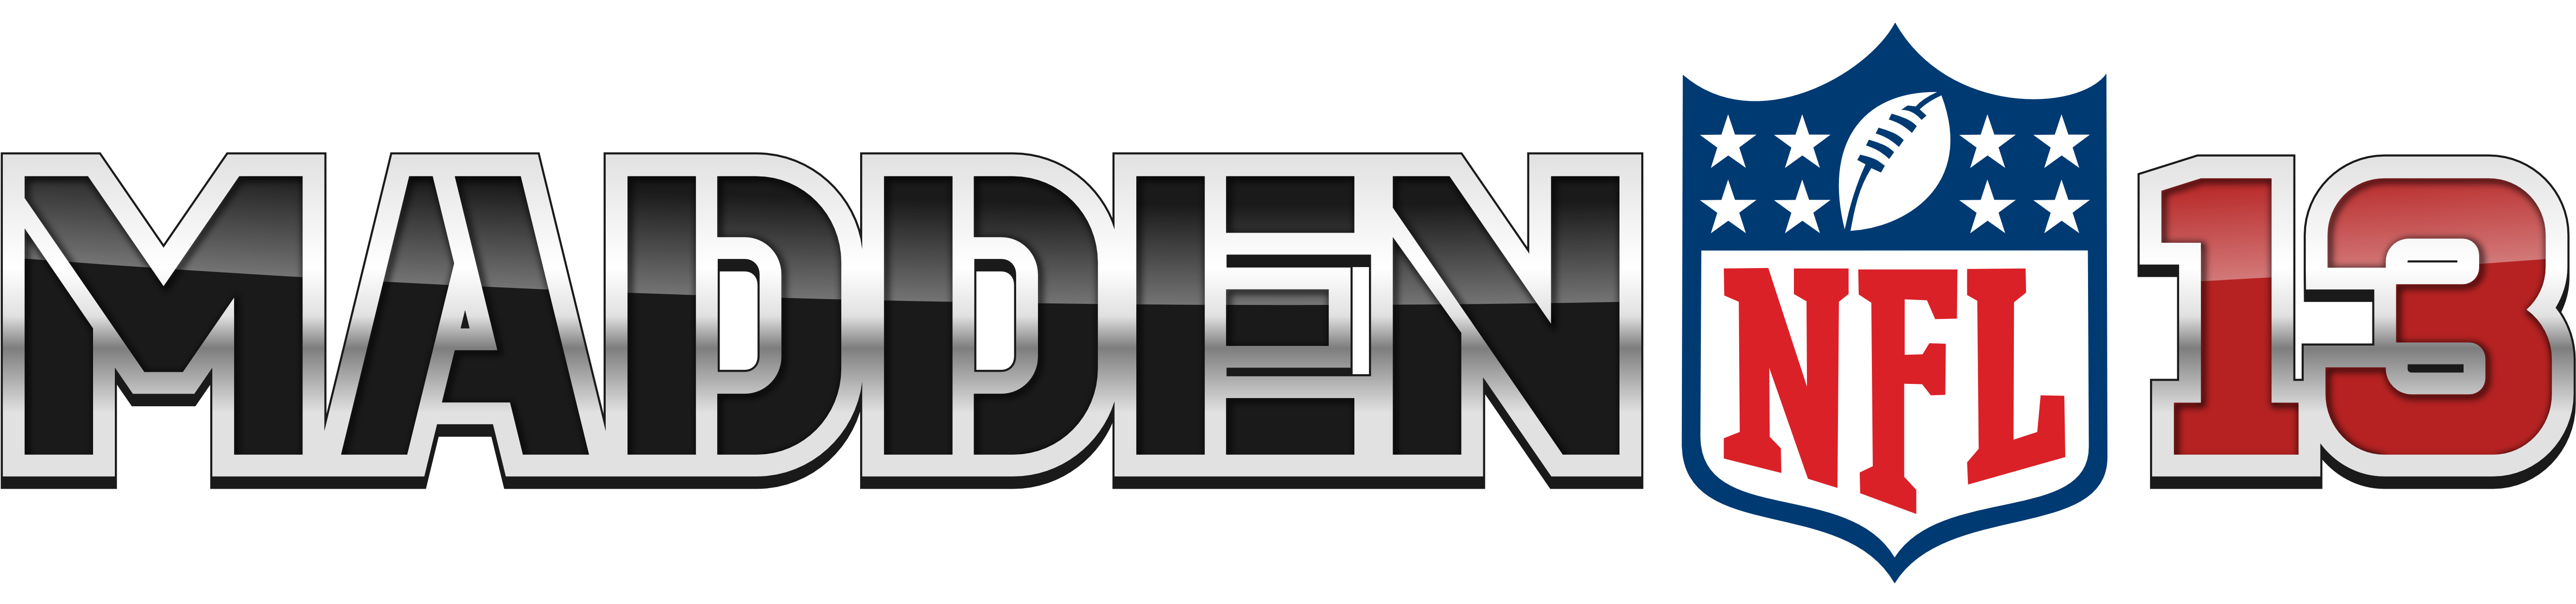 Madden NFL Logo PNG HD